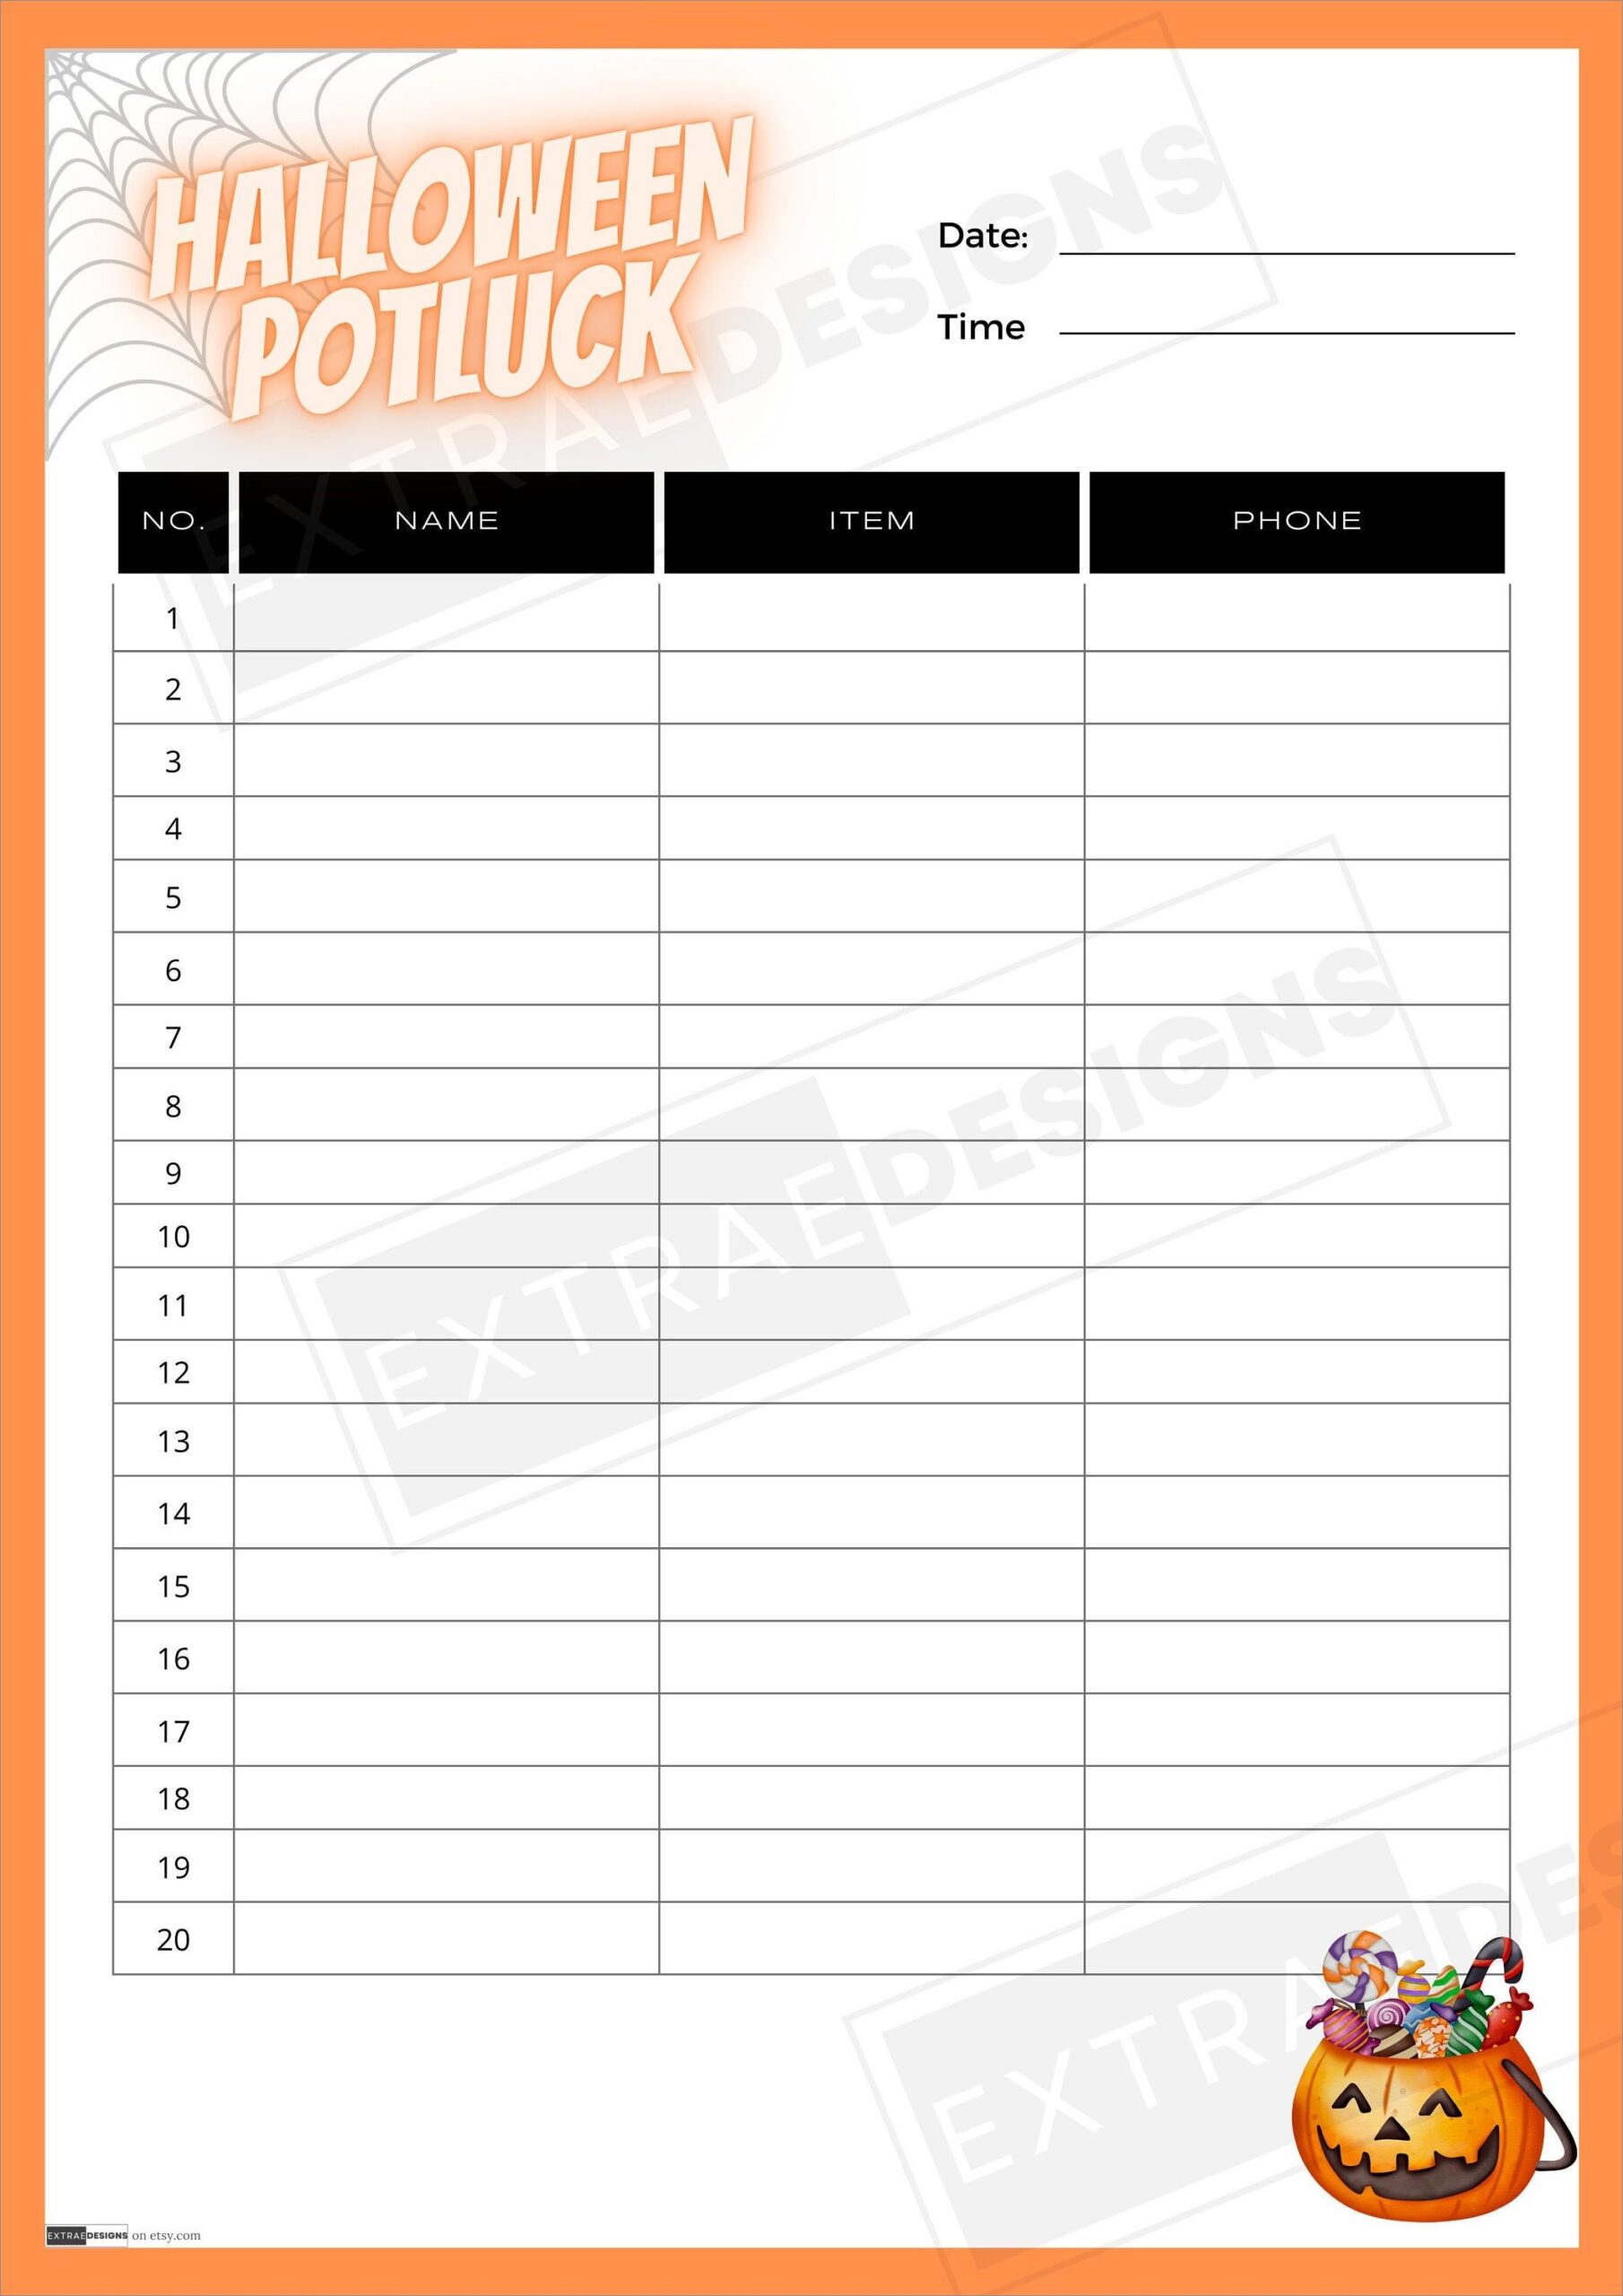 halloween potluck sign-up sheet template